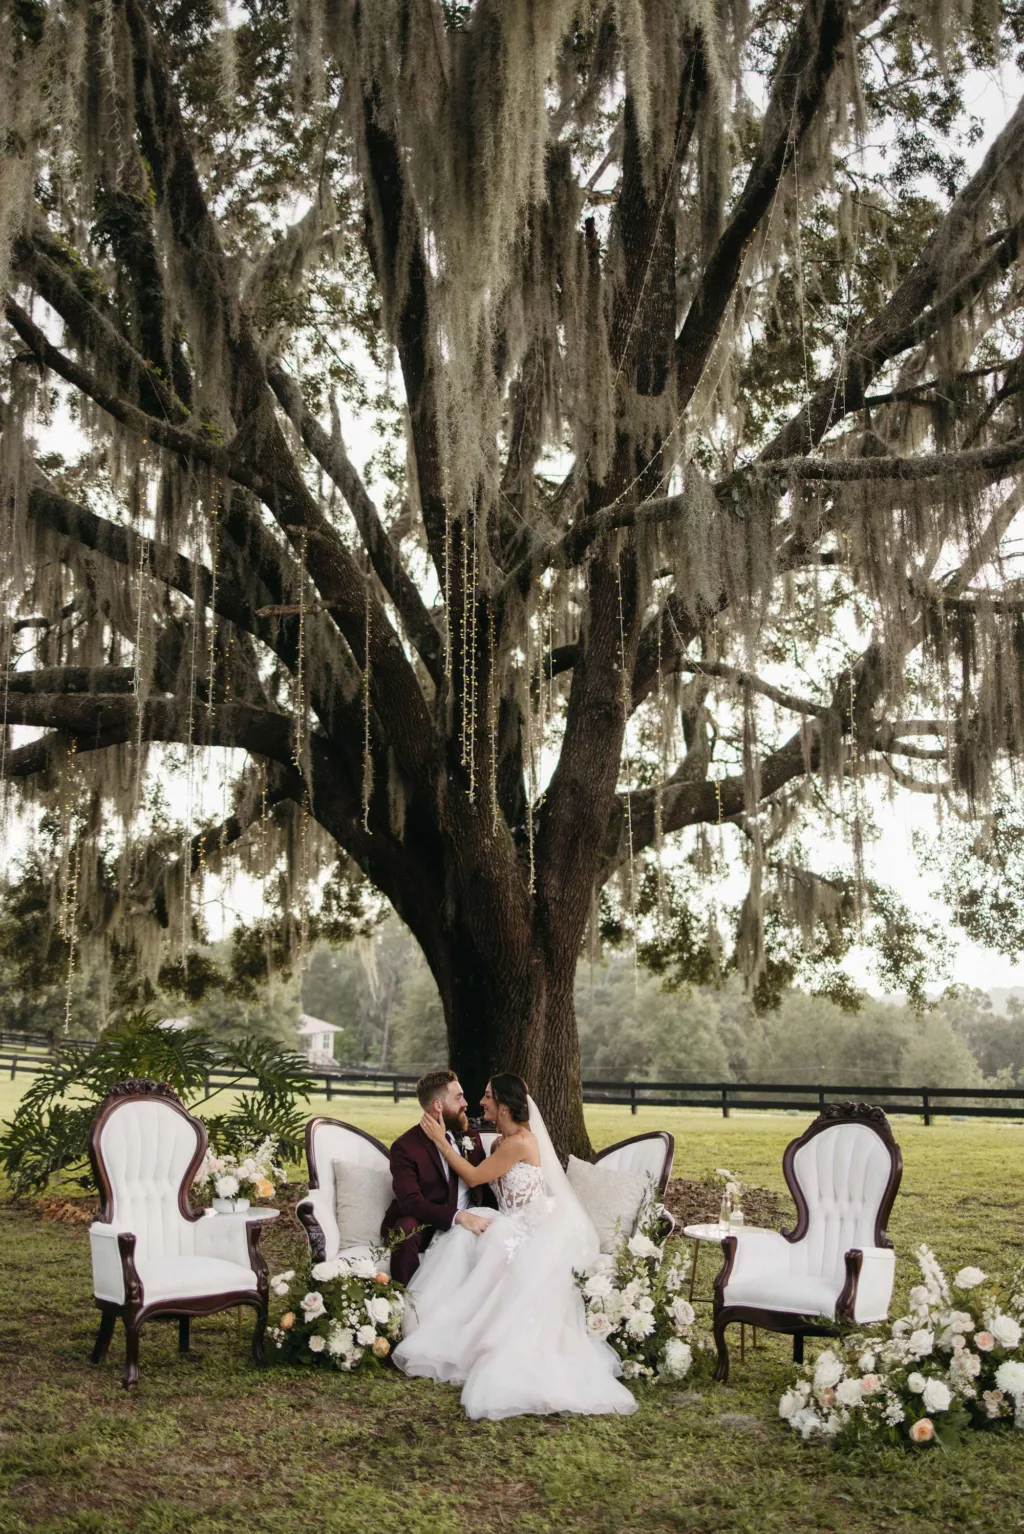 White European Wedding Reception Cocktail Lounge Seating Ideas | Tampa Bay Event Venue La Hacienda on Snow Hill | Florida Planner The Olive Tree Weddings